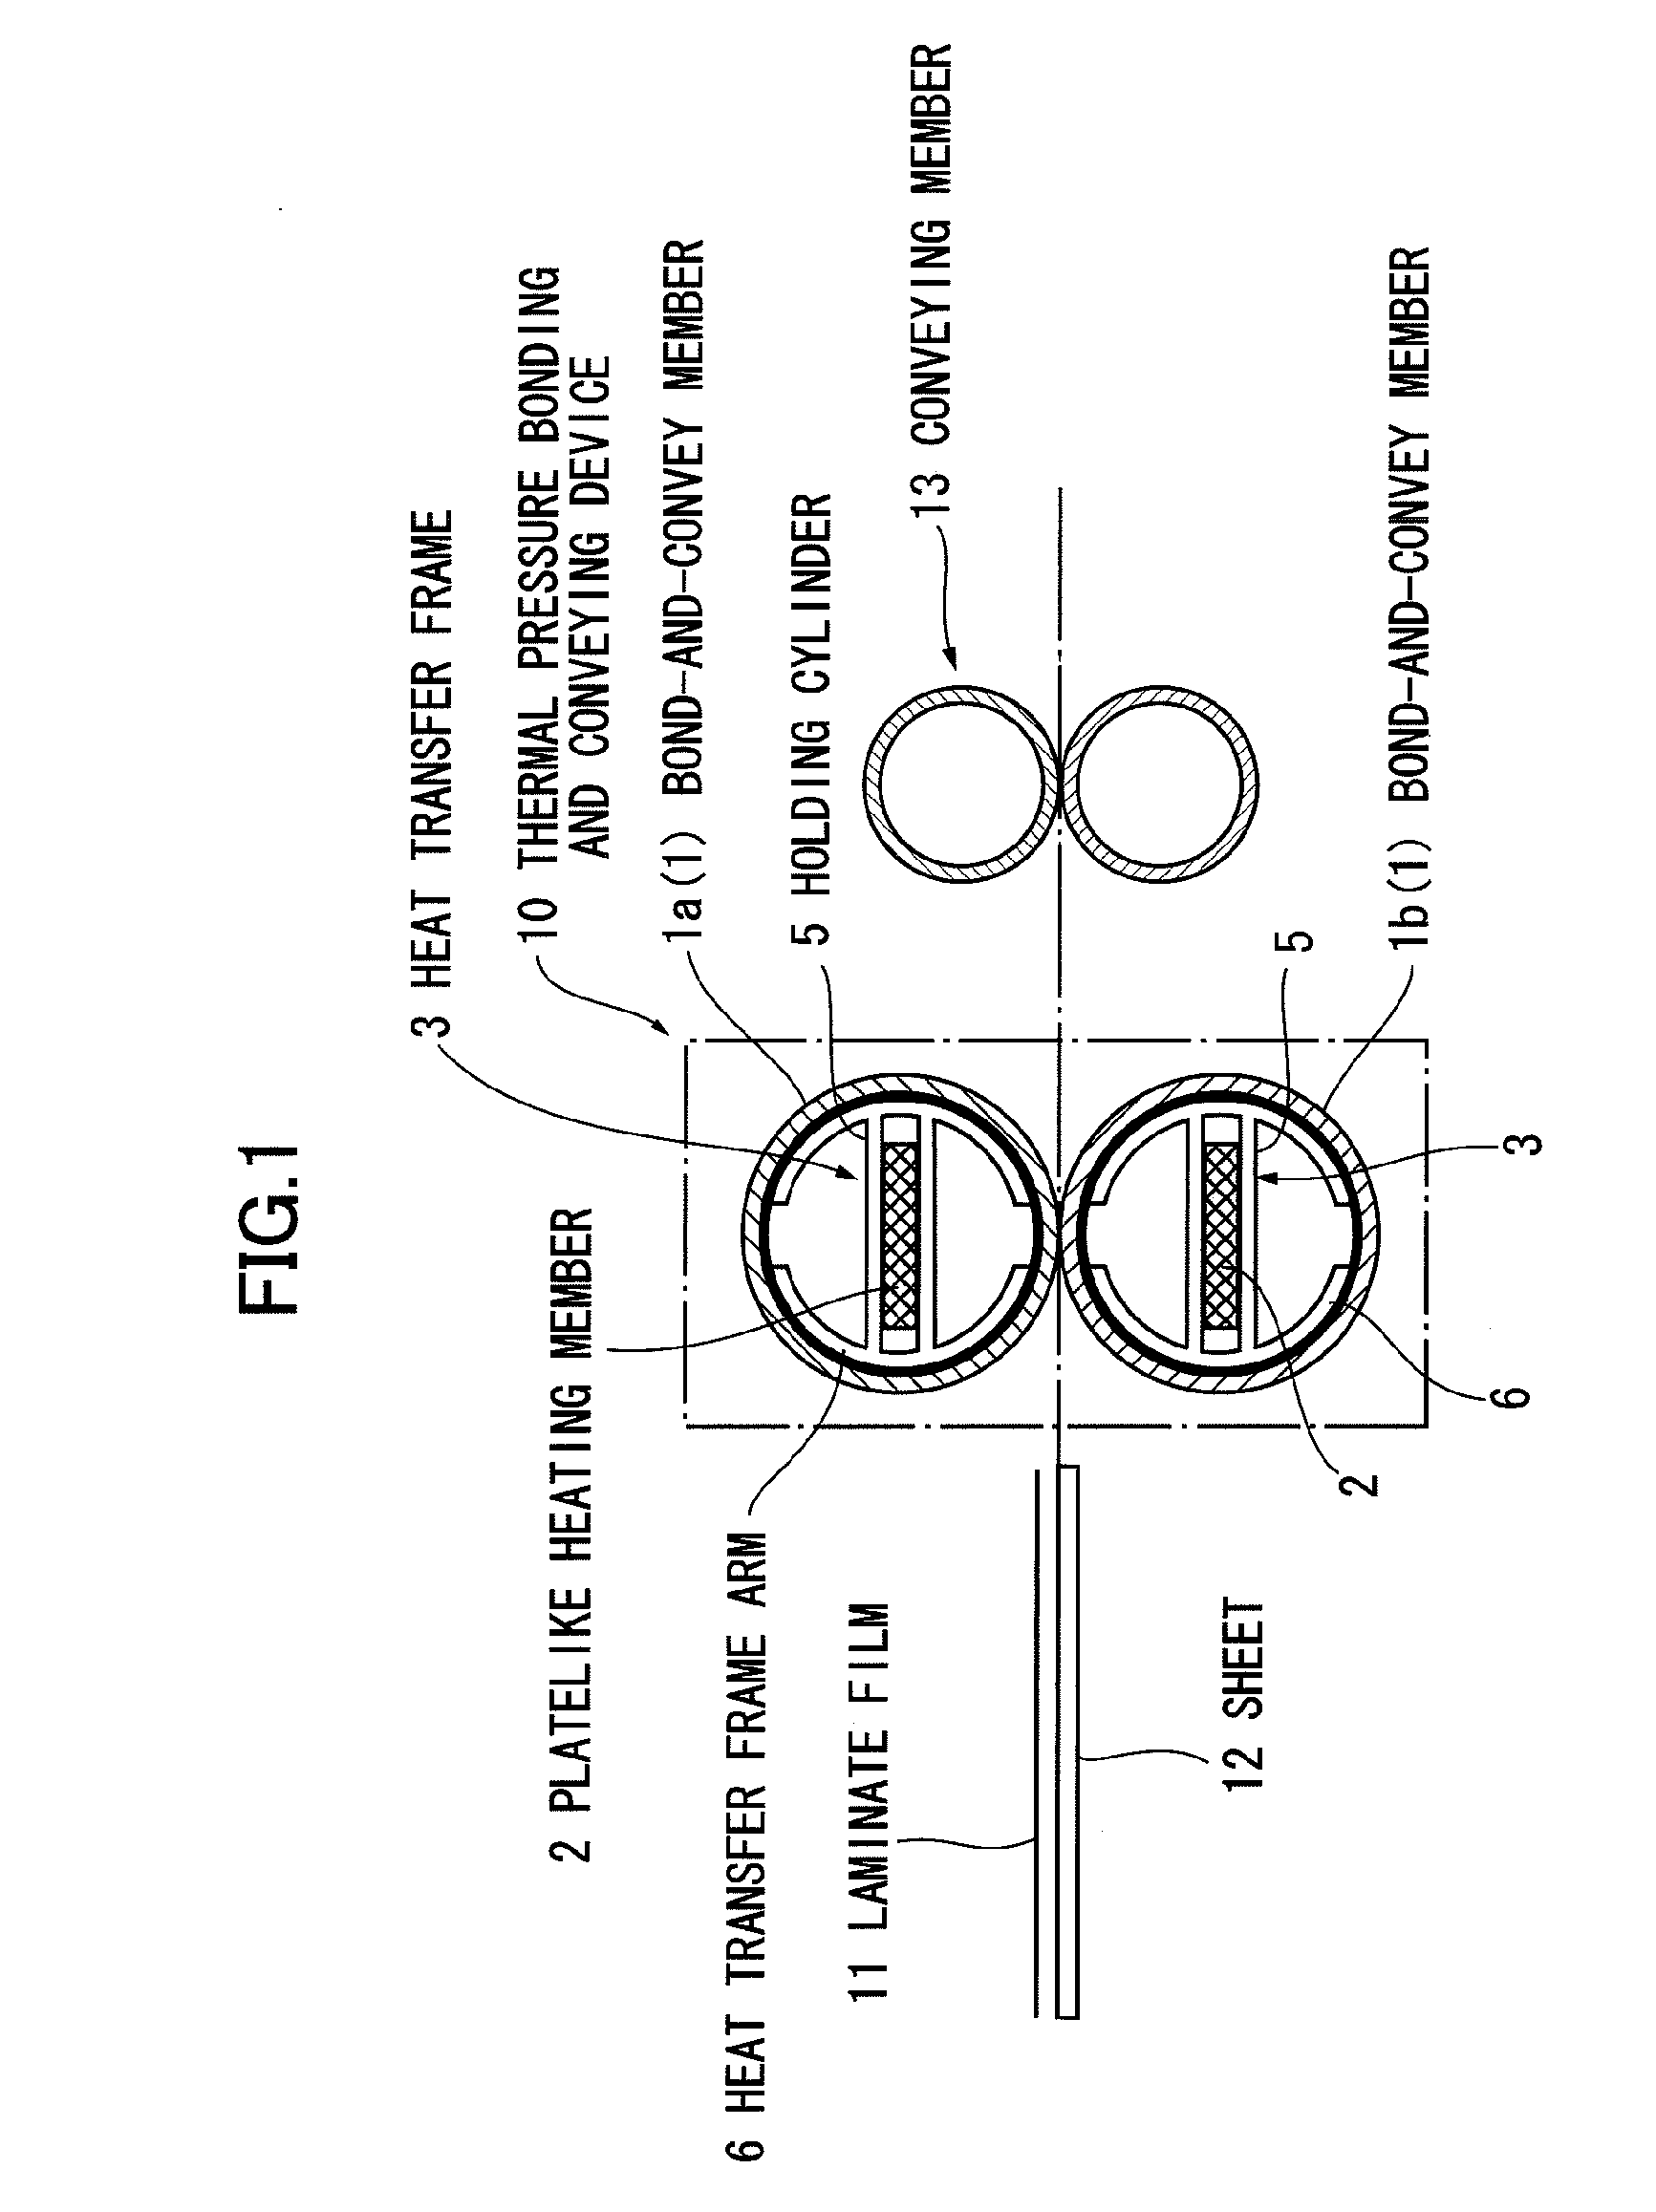 Laminating device and thermal pressure bonding and conveying device used in laminating device